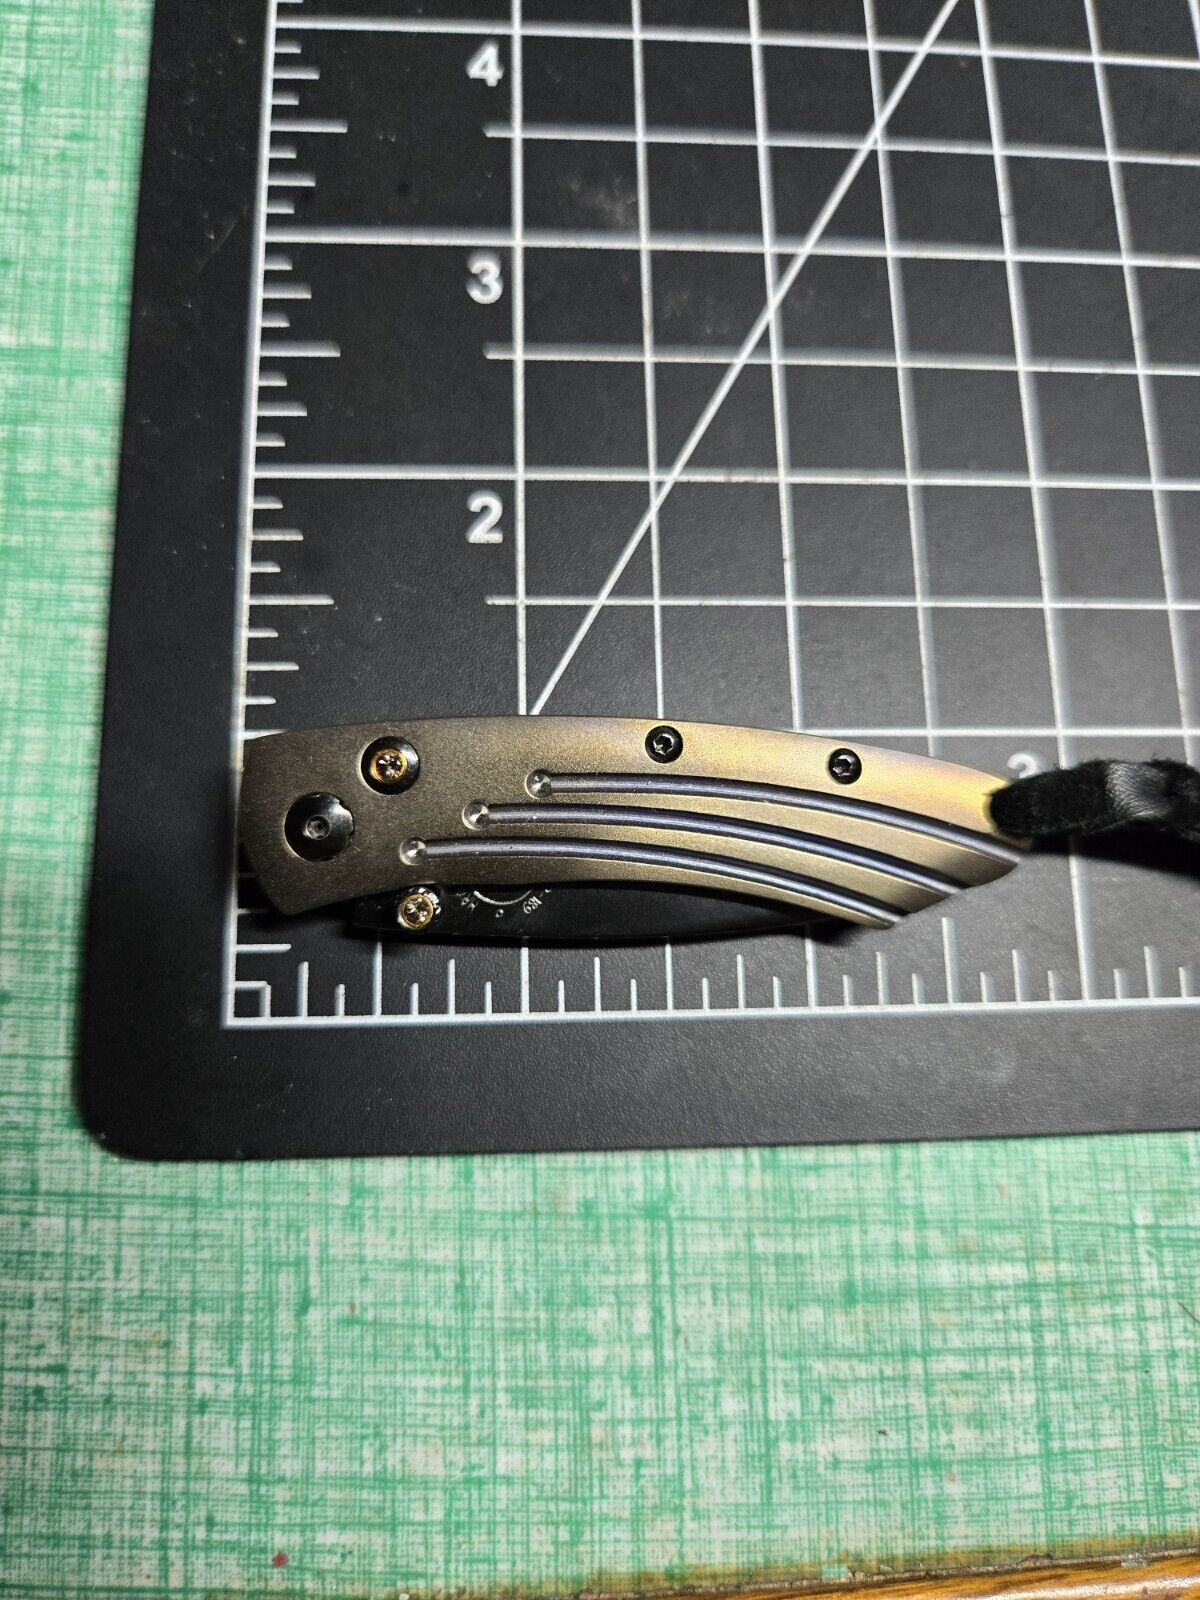 william henry pocket knife folding zdp-189 hrc-67 titan